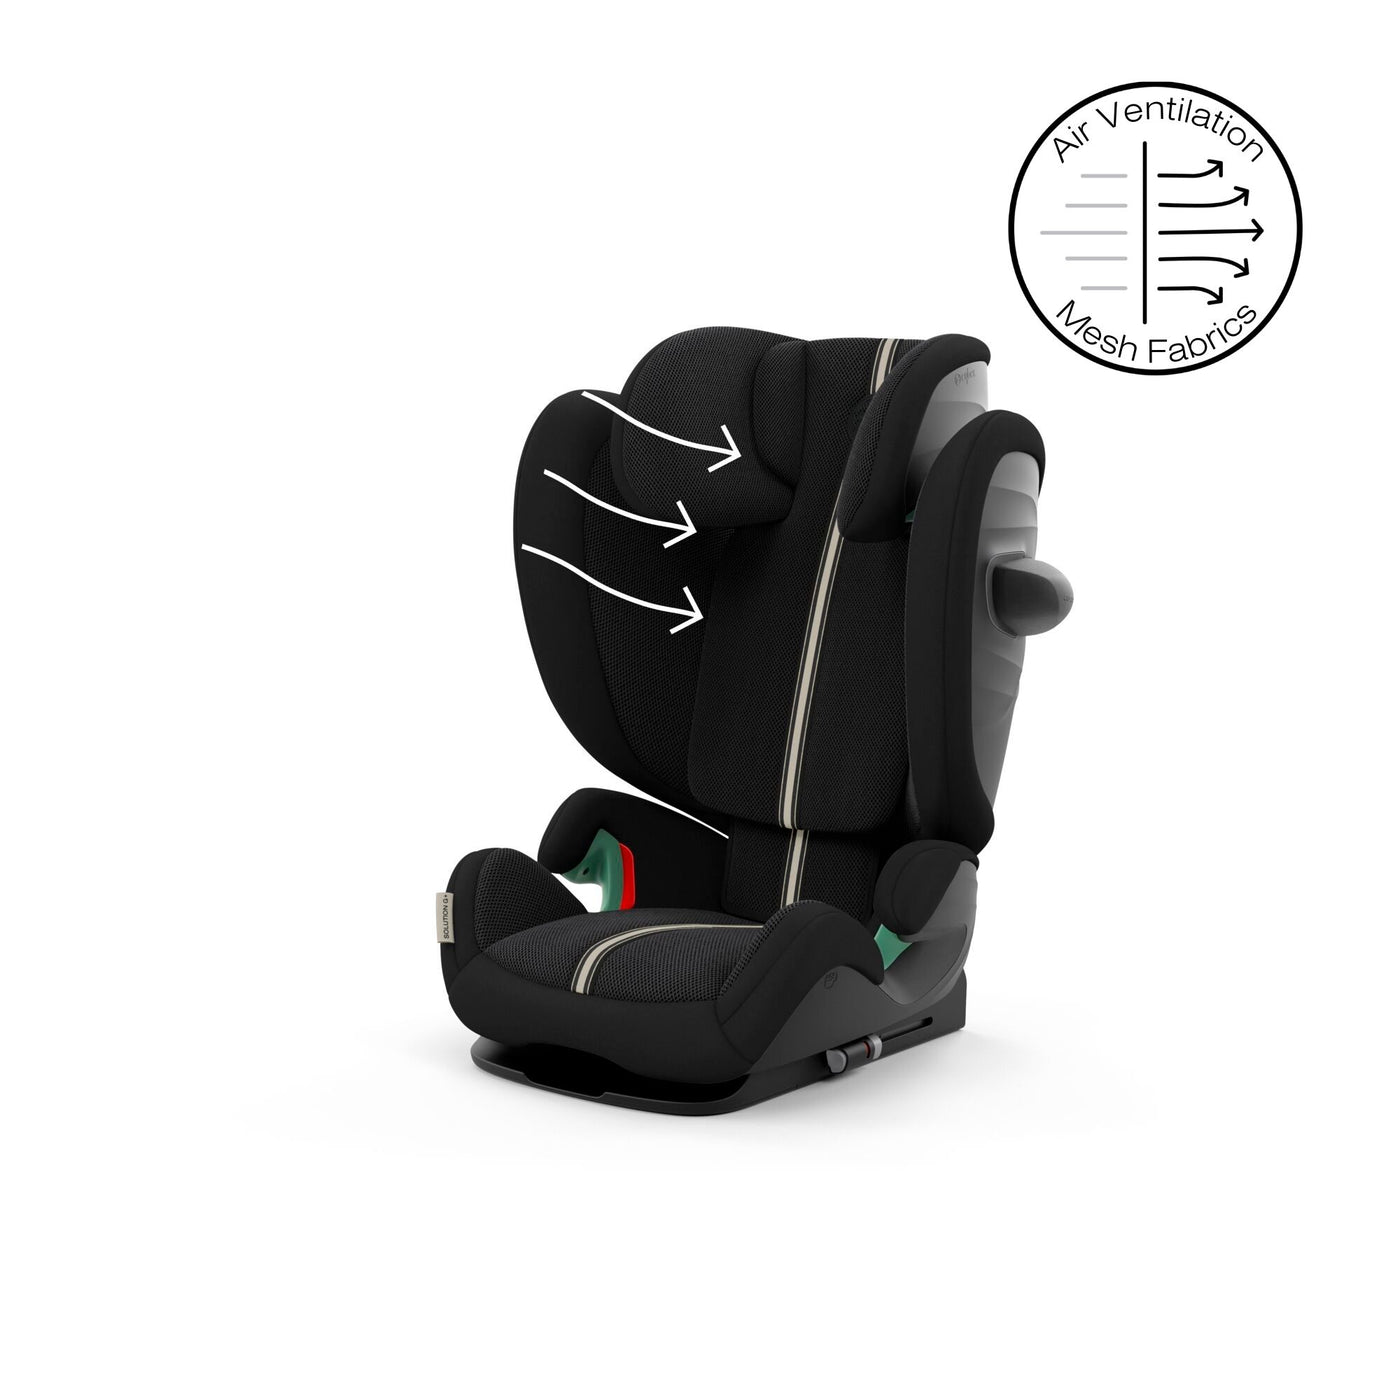 Cybex Solution G i-Fix PLUS Car Seat - Moon Black